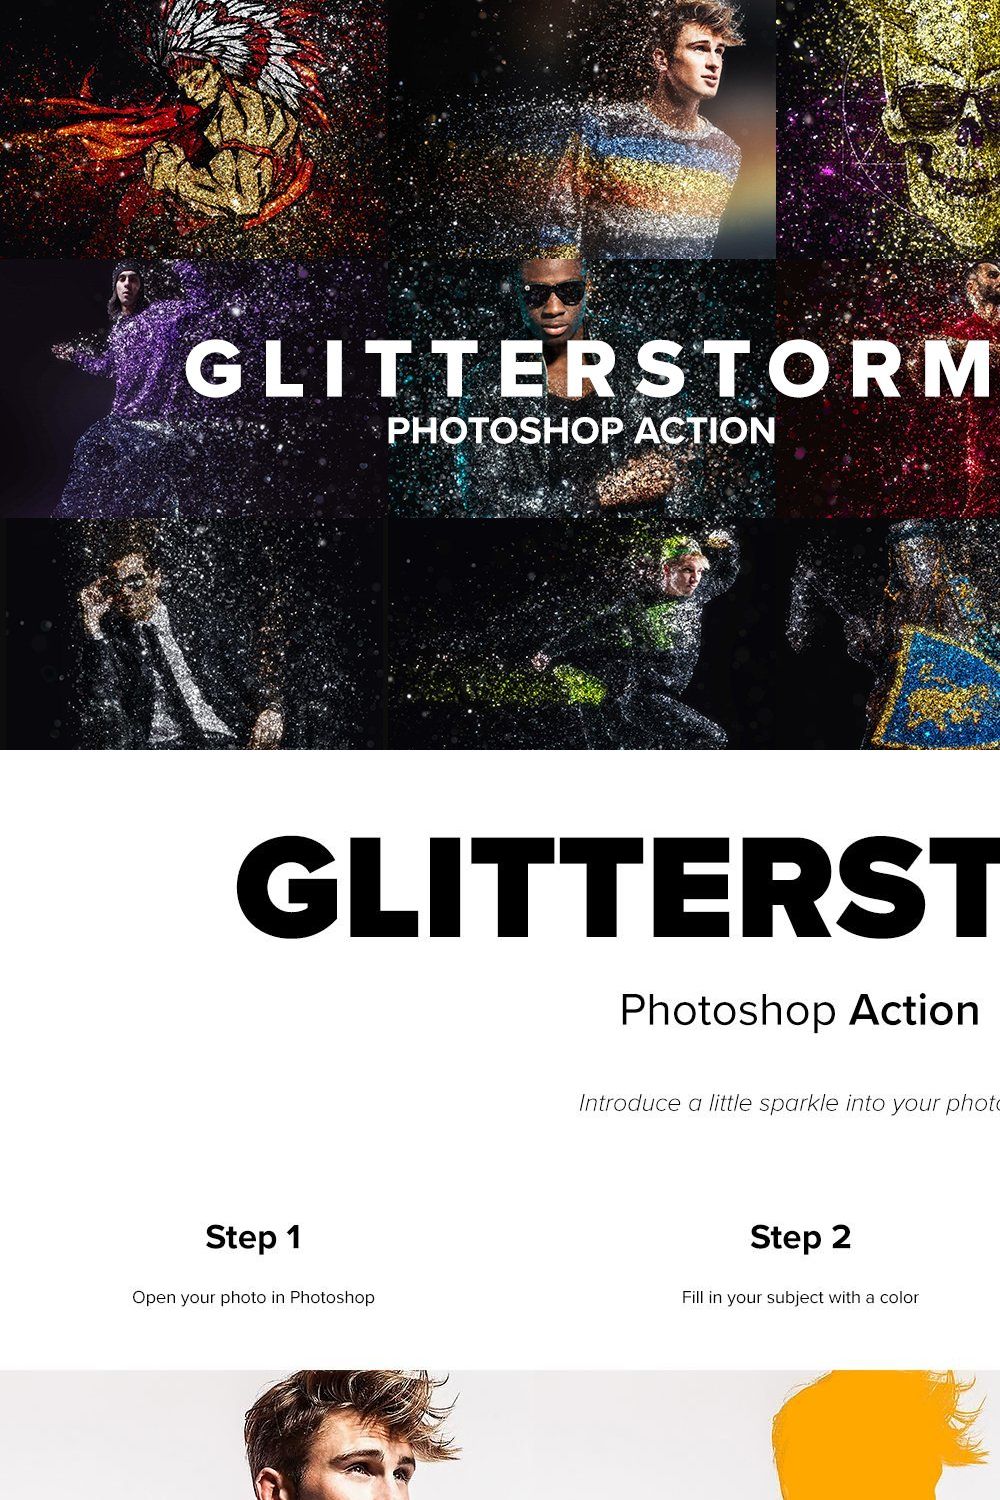 Glitterstorm Photoshop Action pinterest preview image.